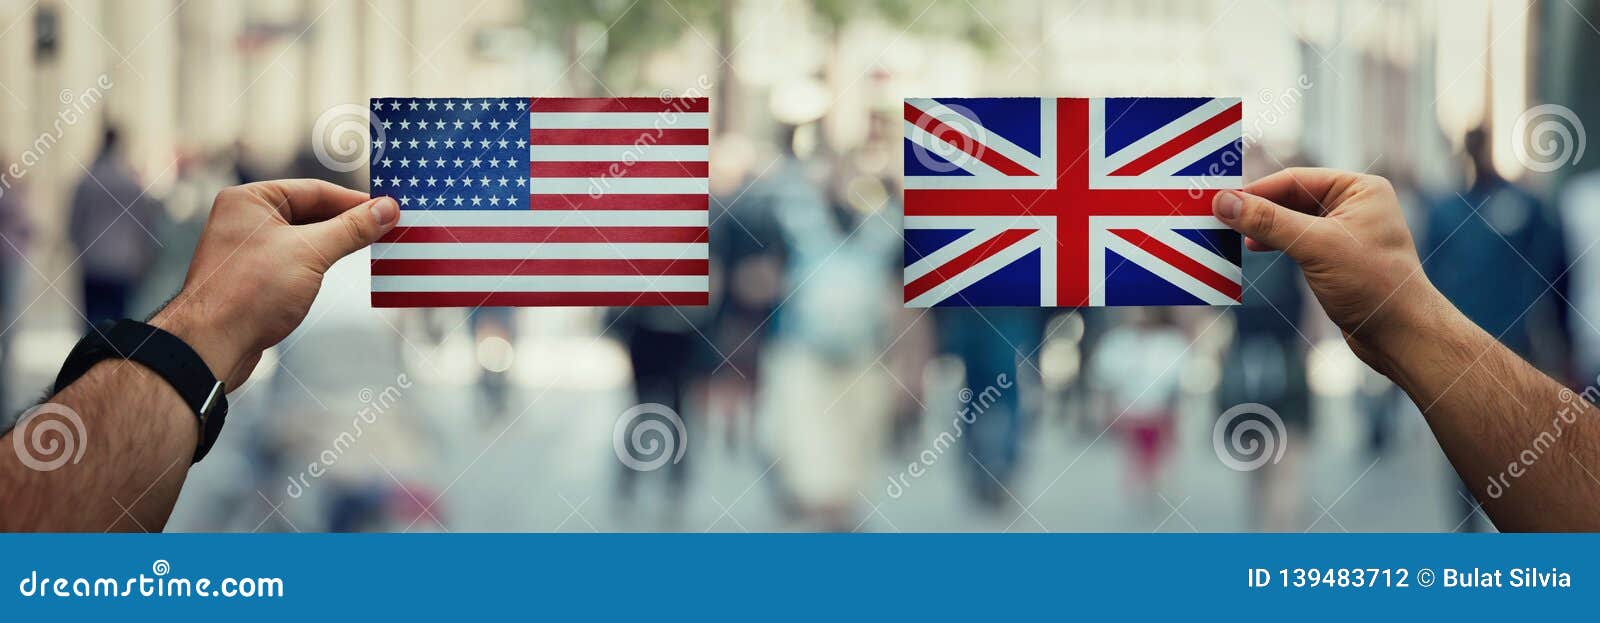 Usa vs uk stock photo. Image of collaboration, friendship - 139483712